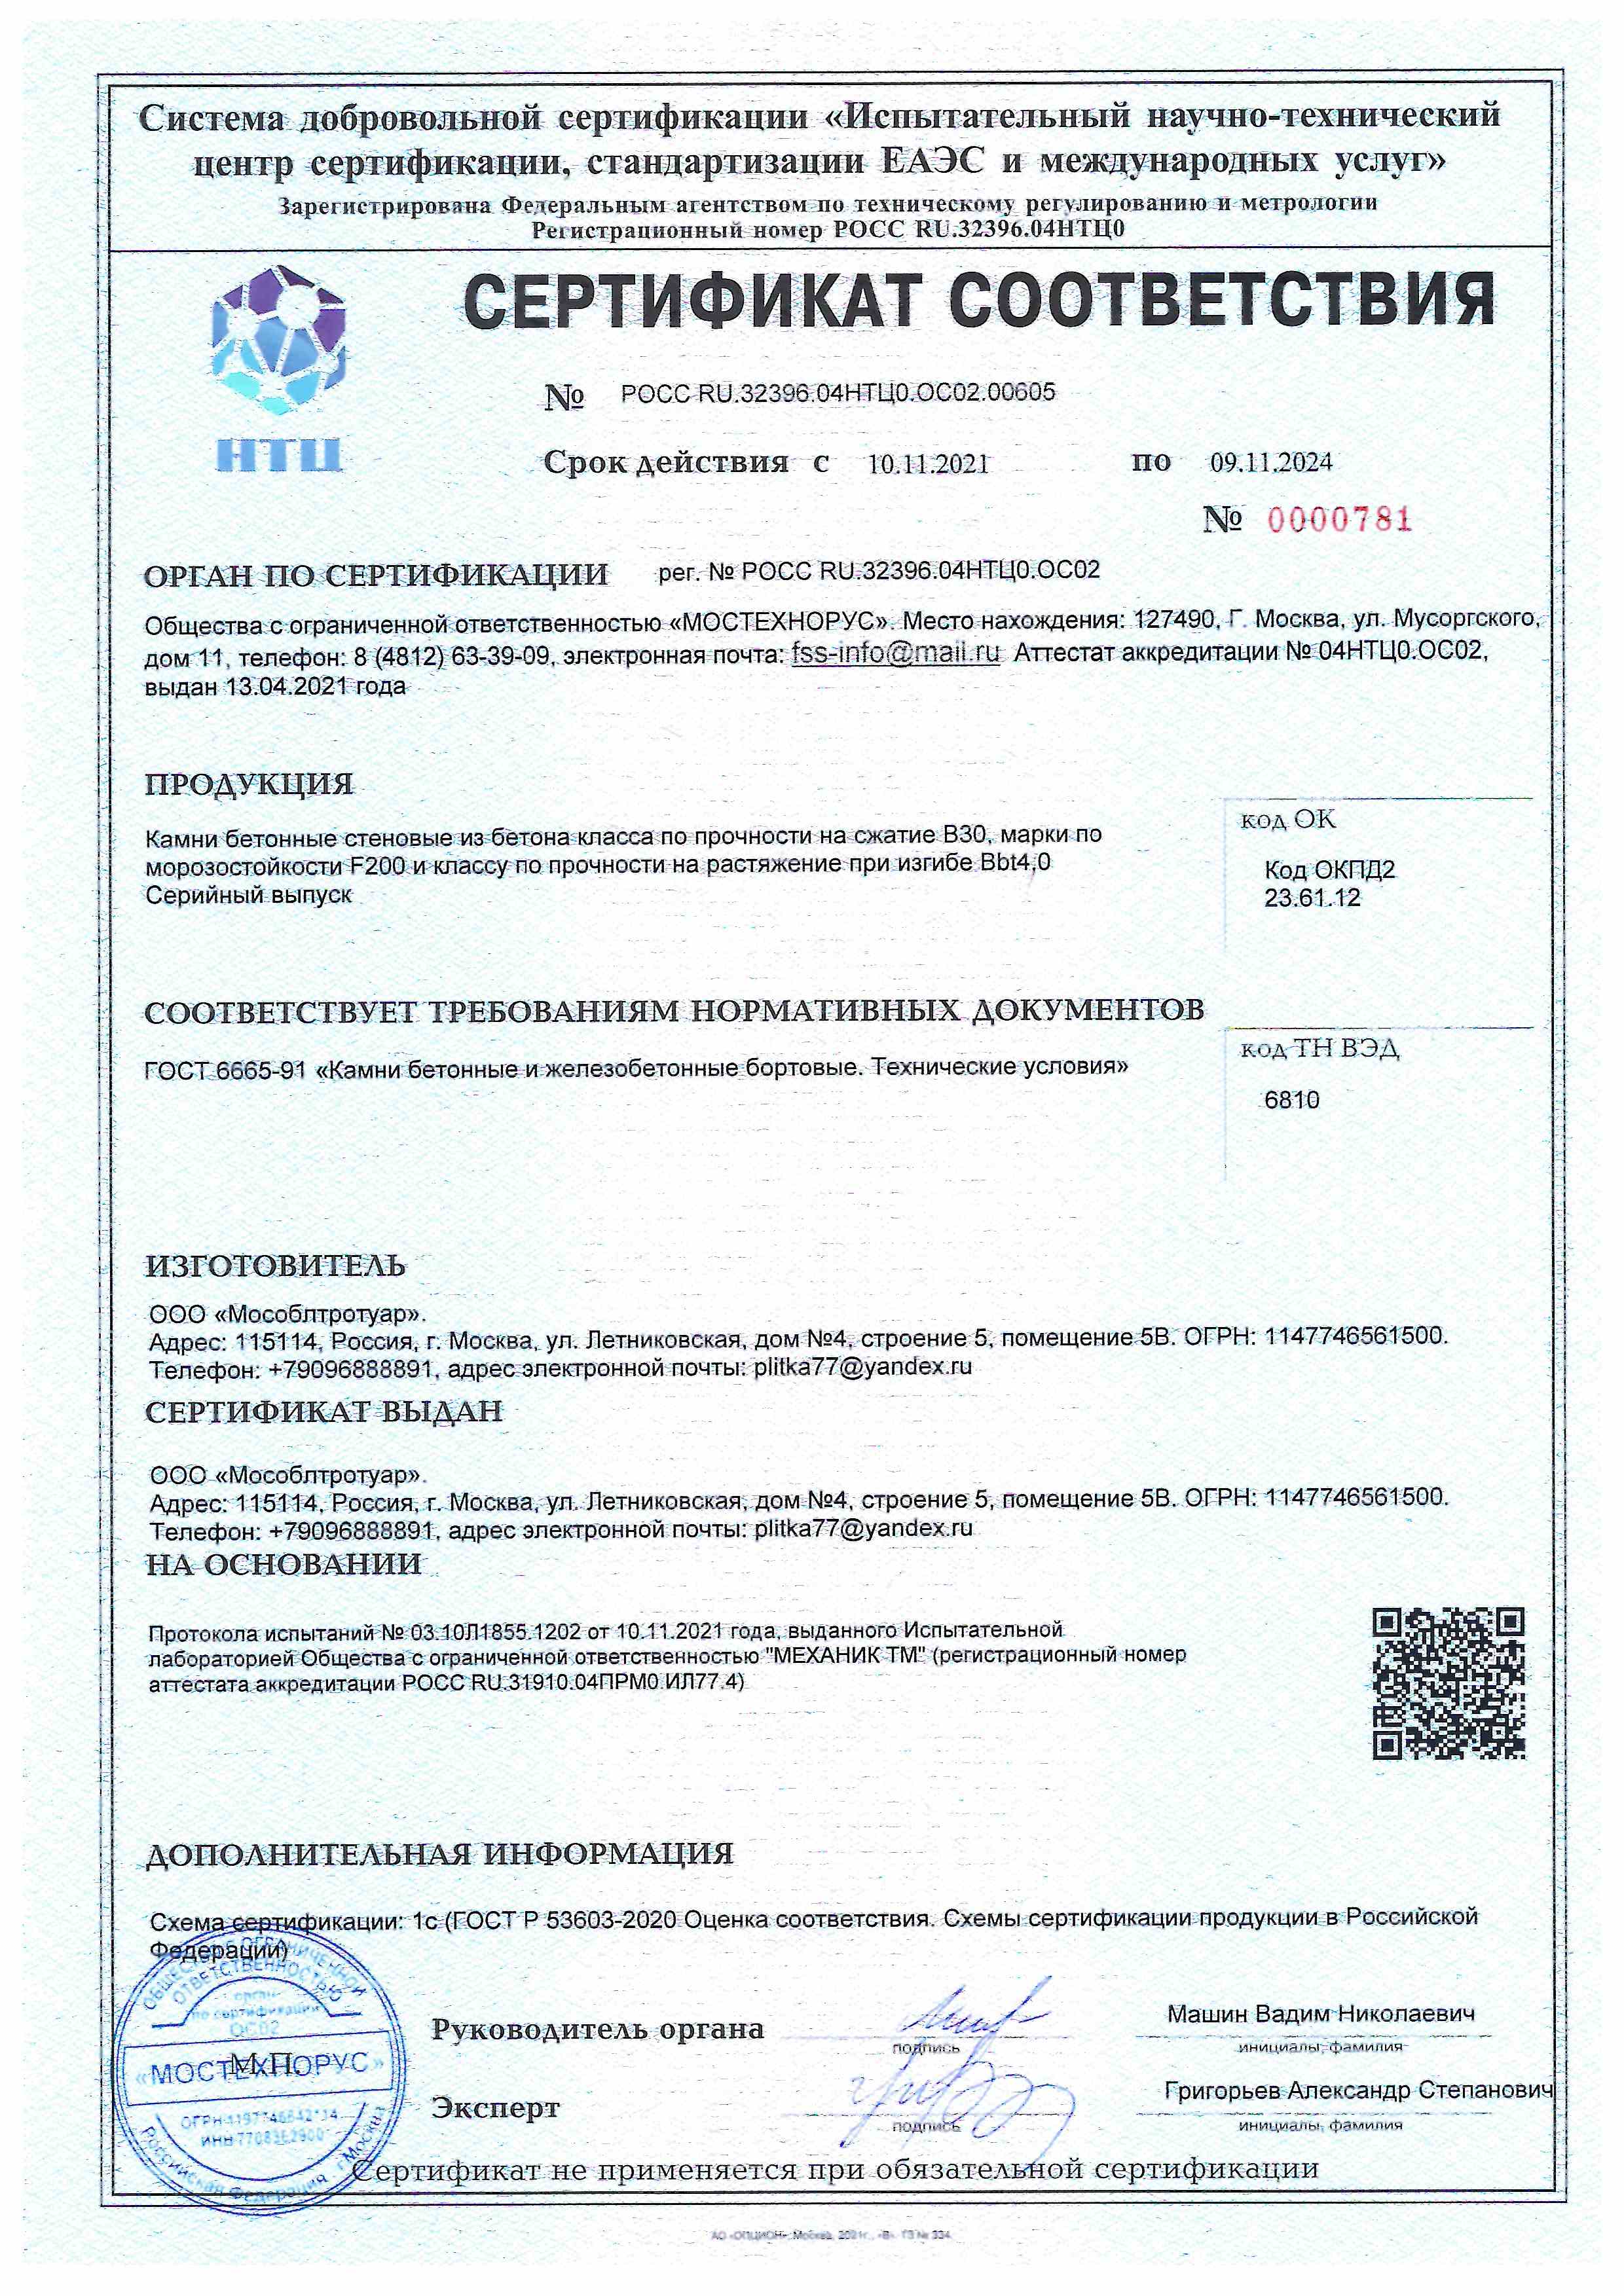 Сертификат соответствия Камни бетонные "МосОблТротуар"